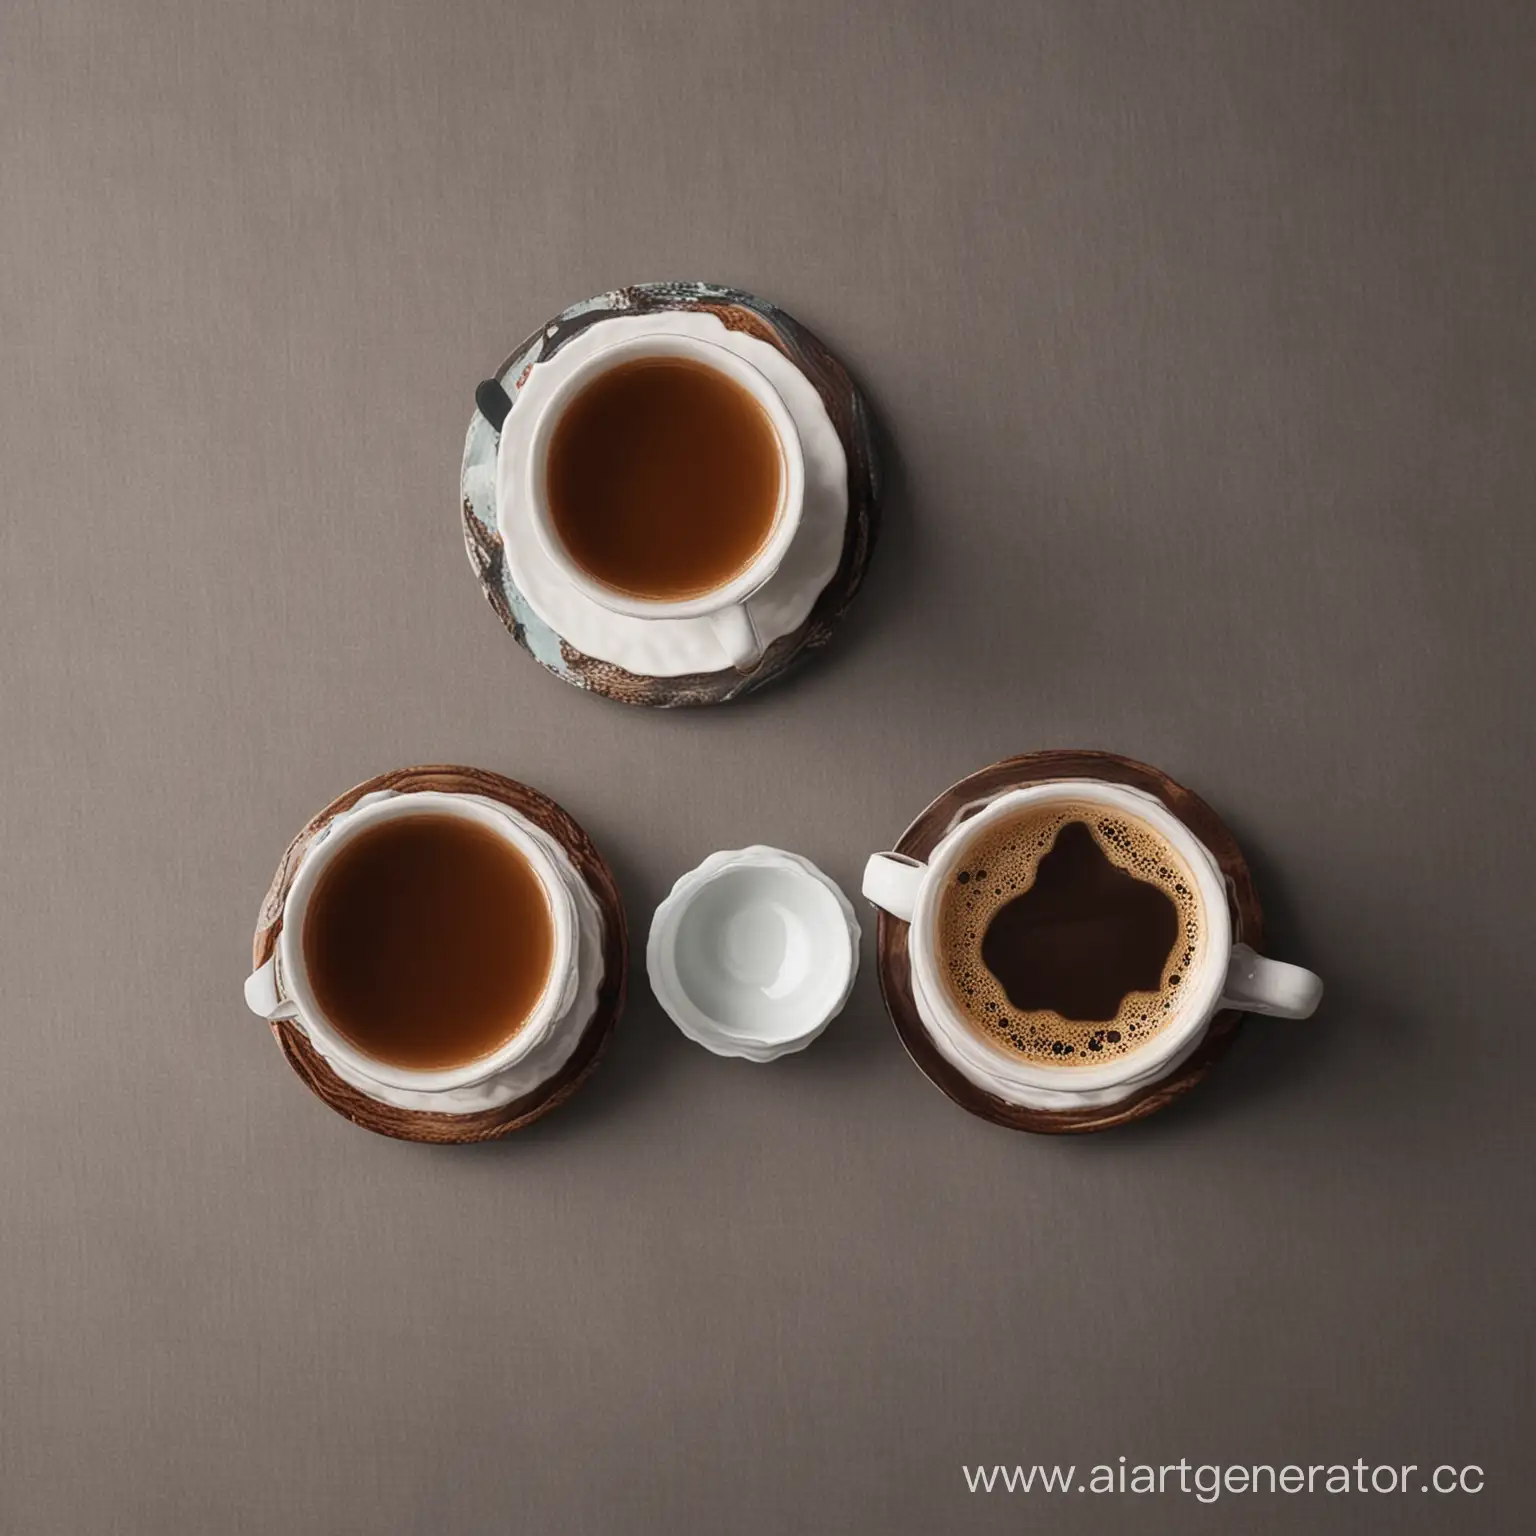 Delightful-Tea-and-Coffee-Break-in-Cozy-Caf-Setting